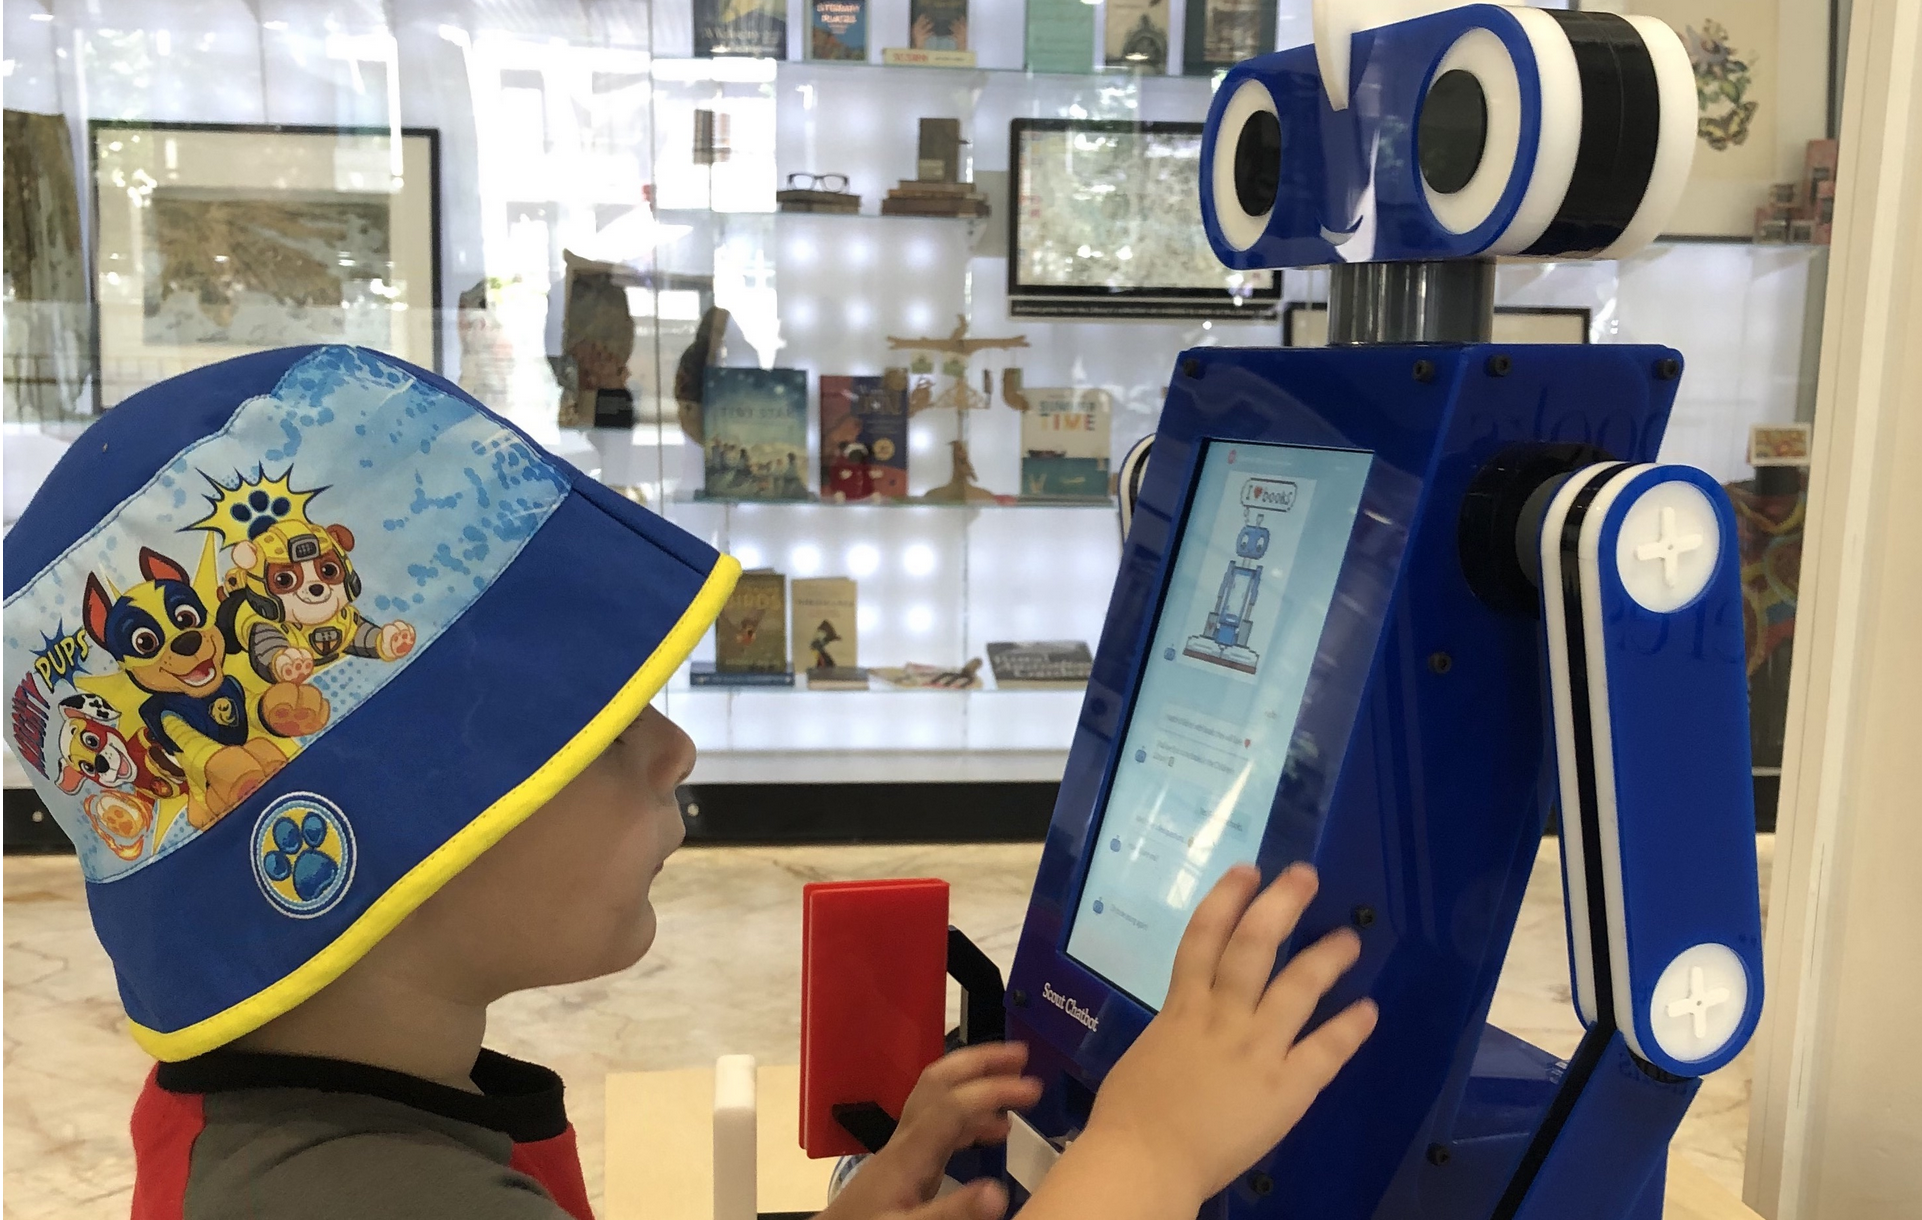 A kid using a Huey the Bookbot kiosk